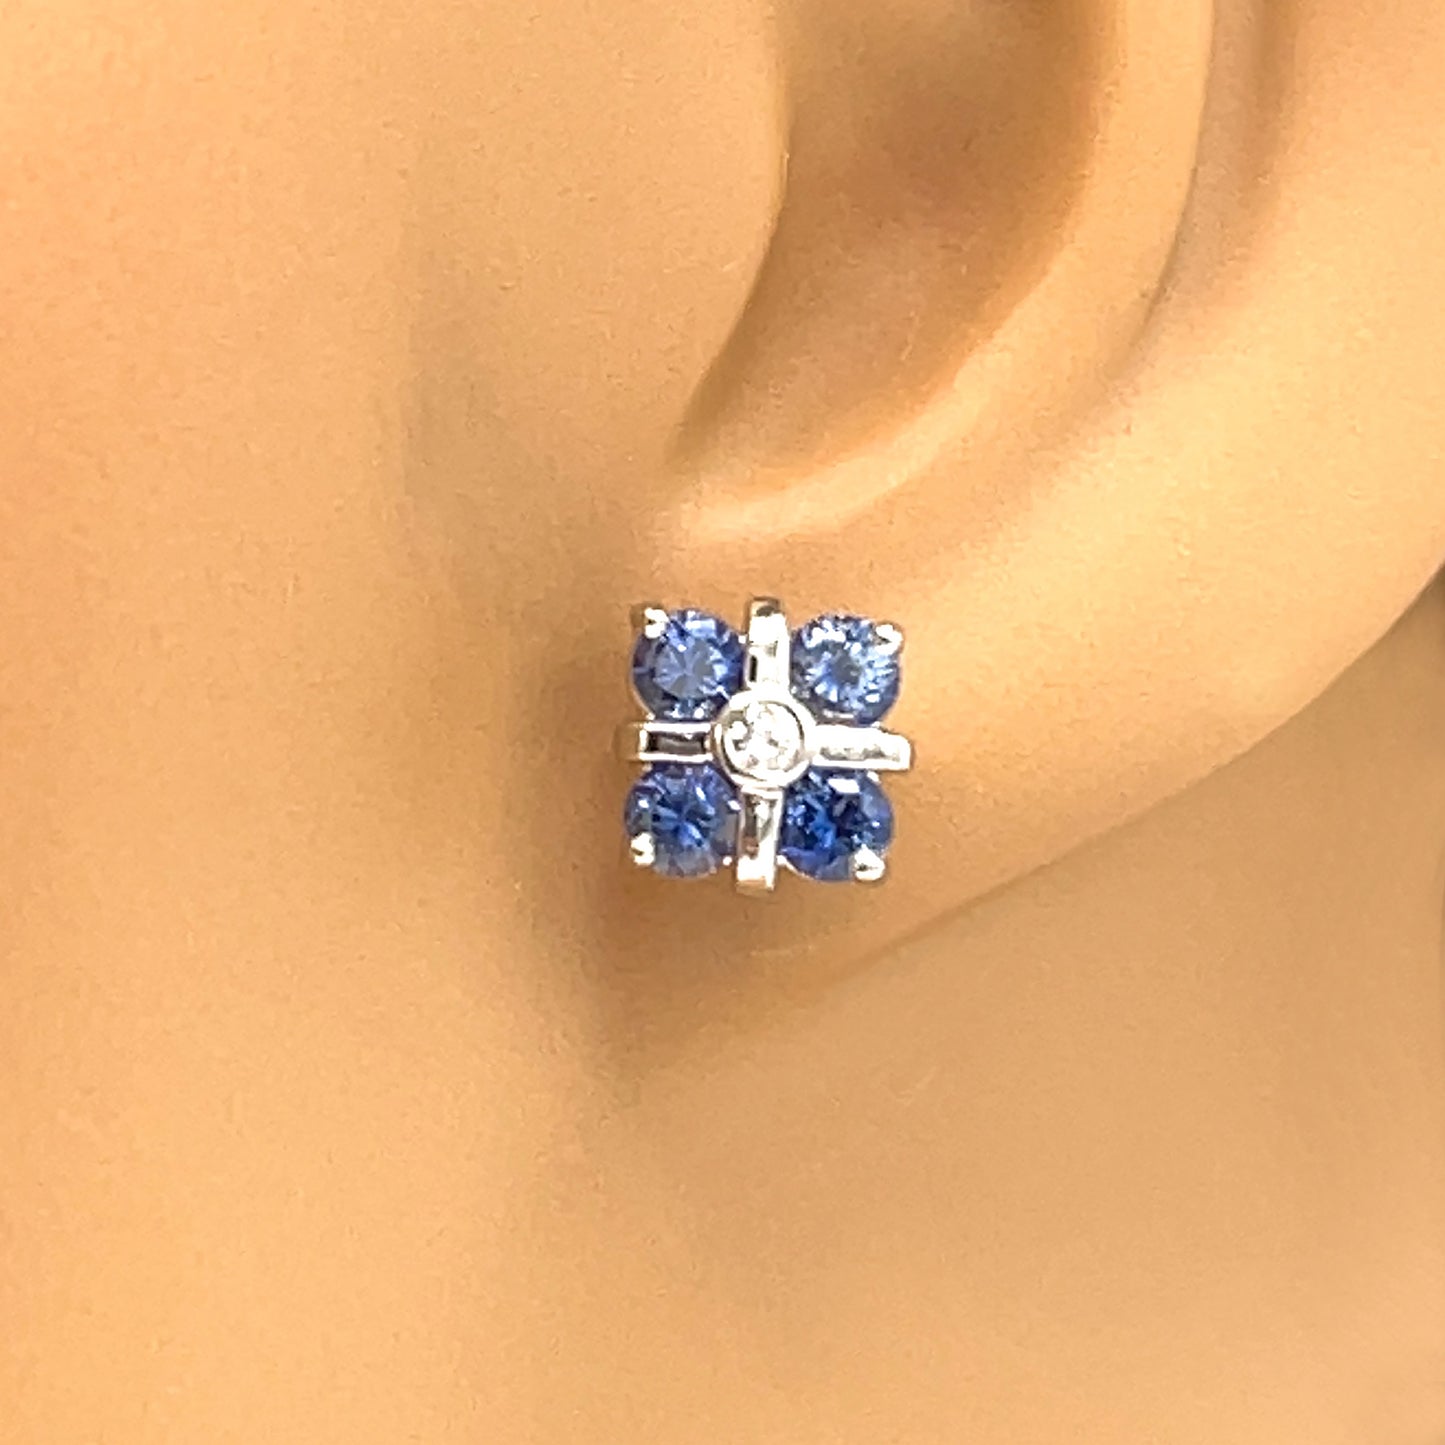 White Gold Sapphire Gift Box Stud Earrings